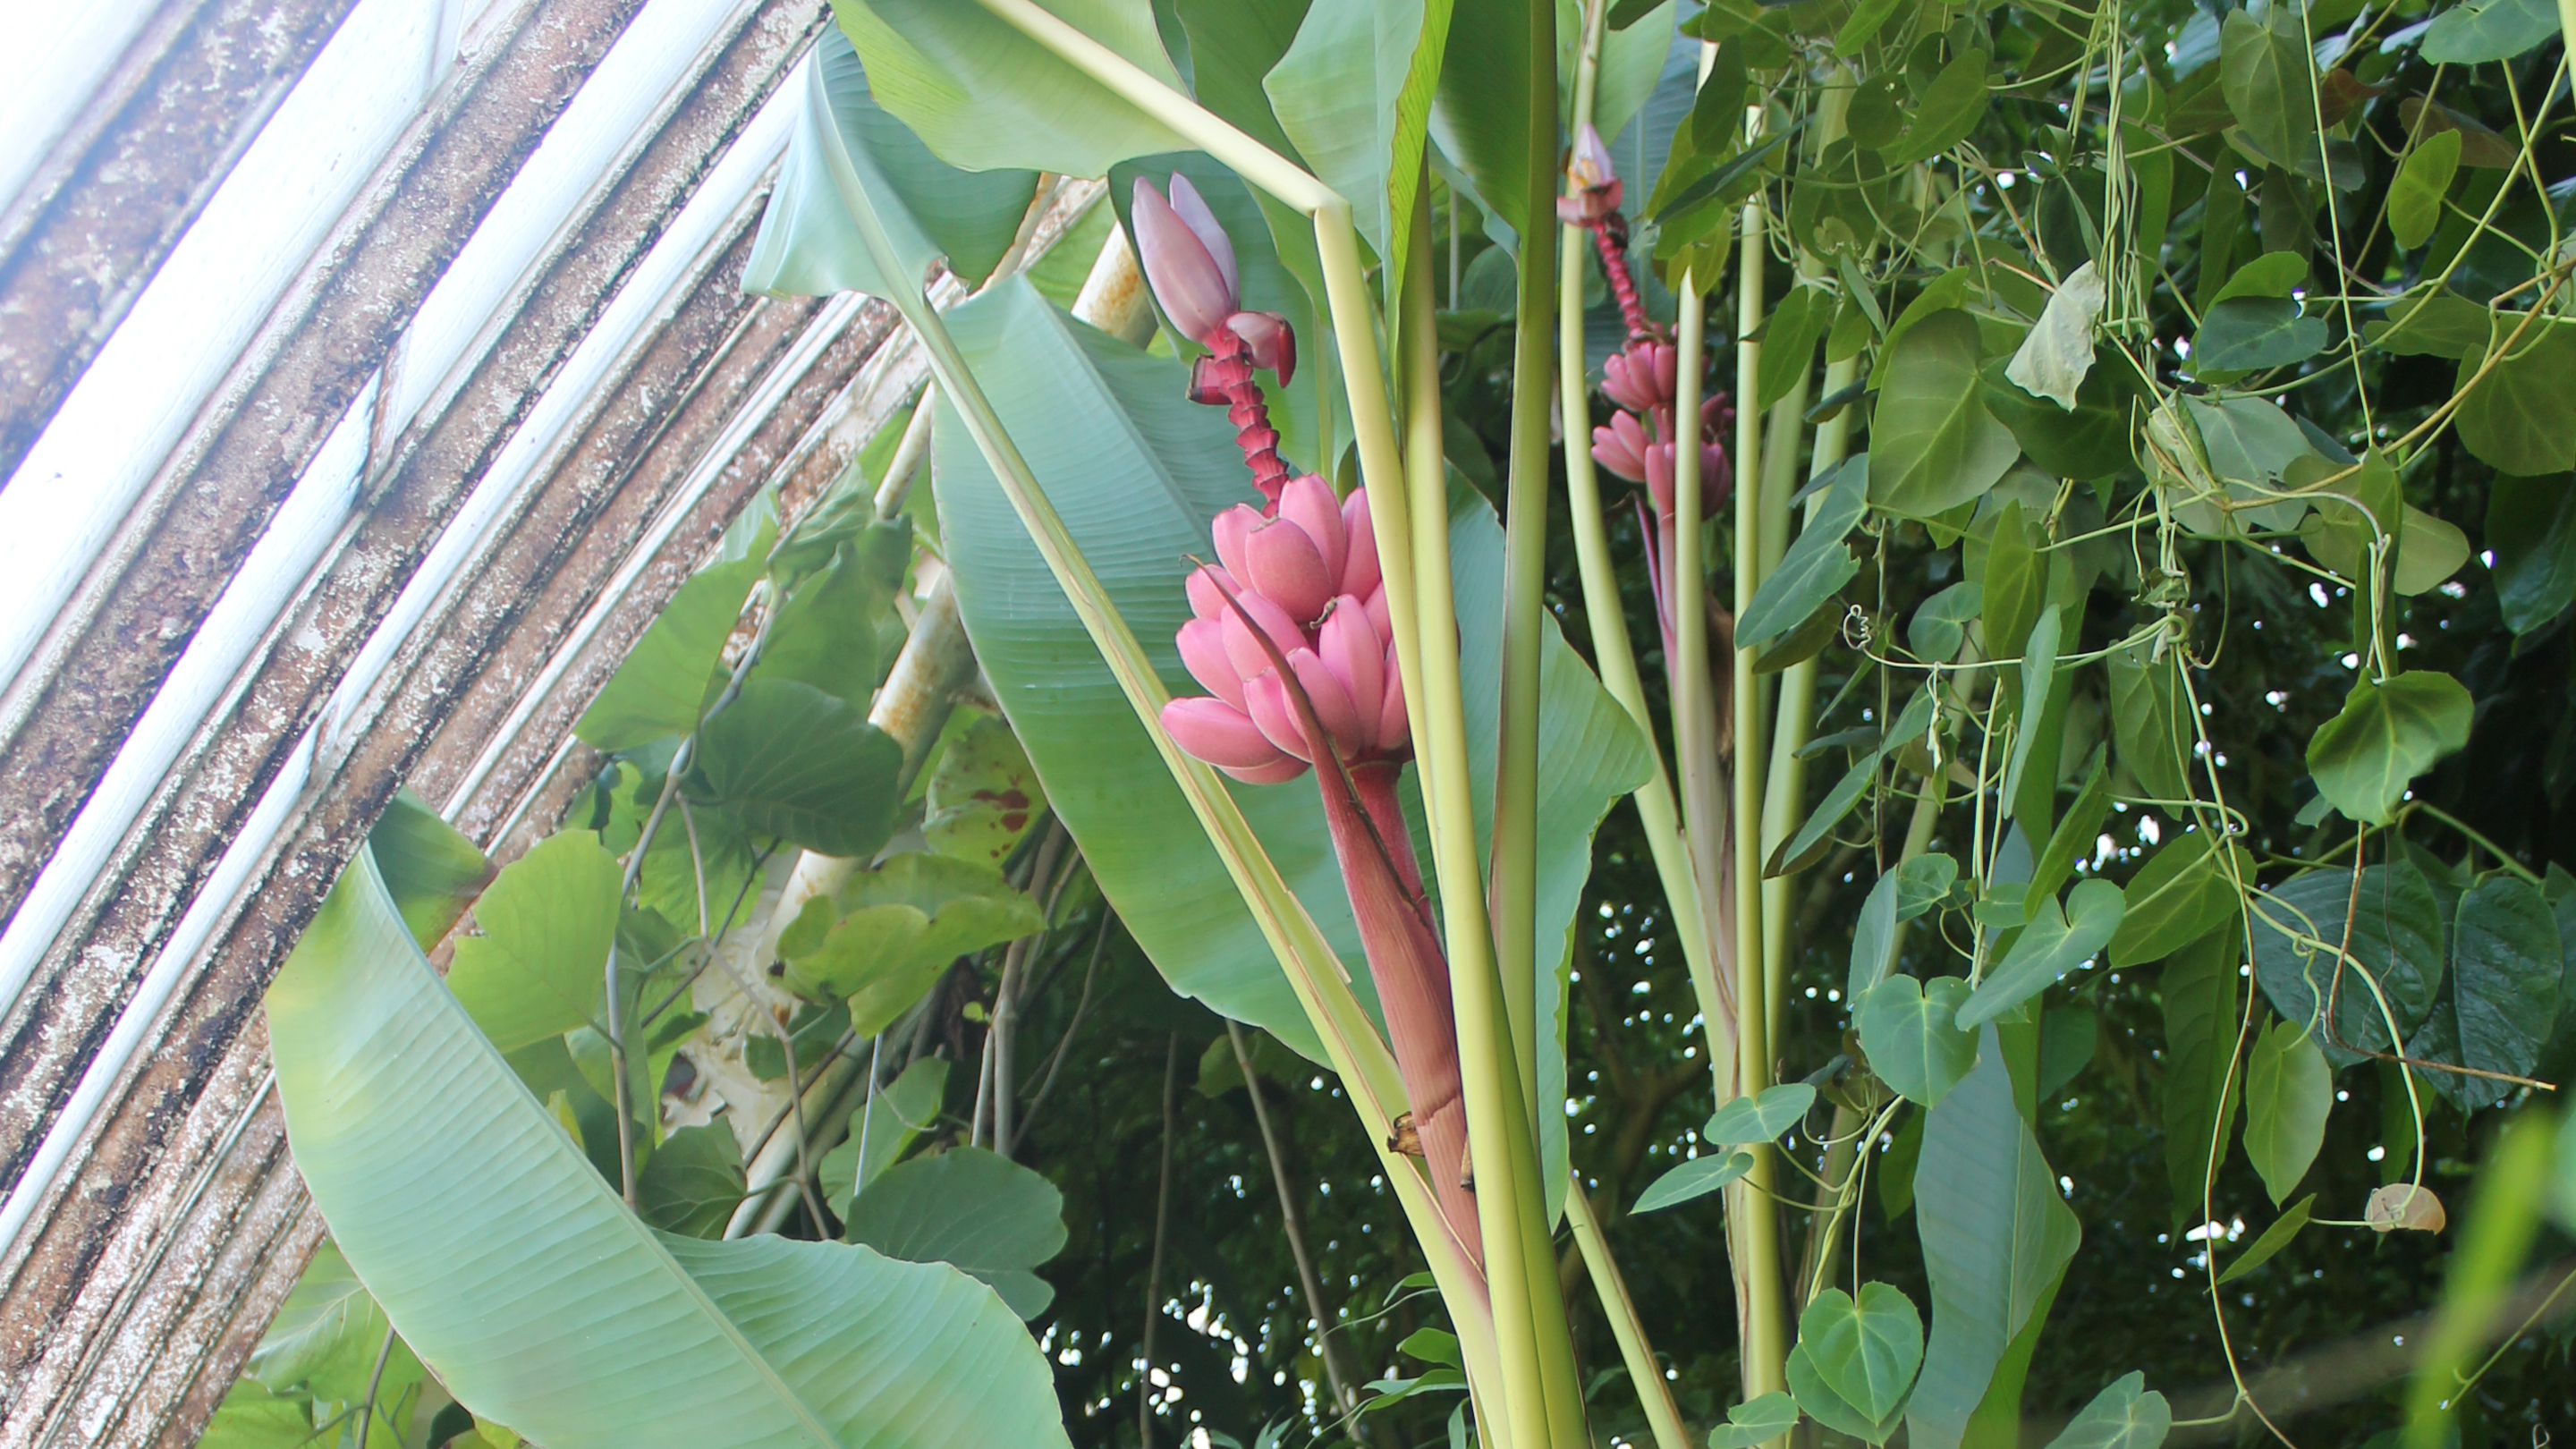 Musa vueltina, the pink banana